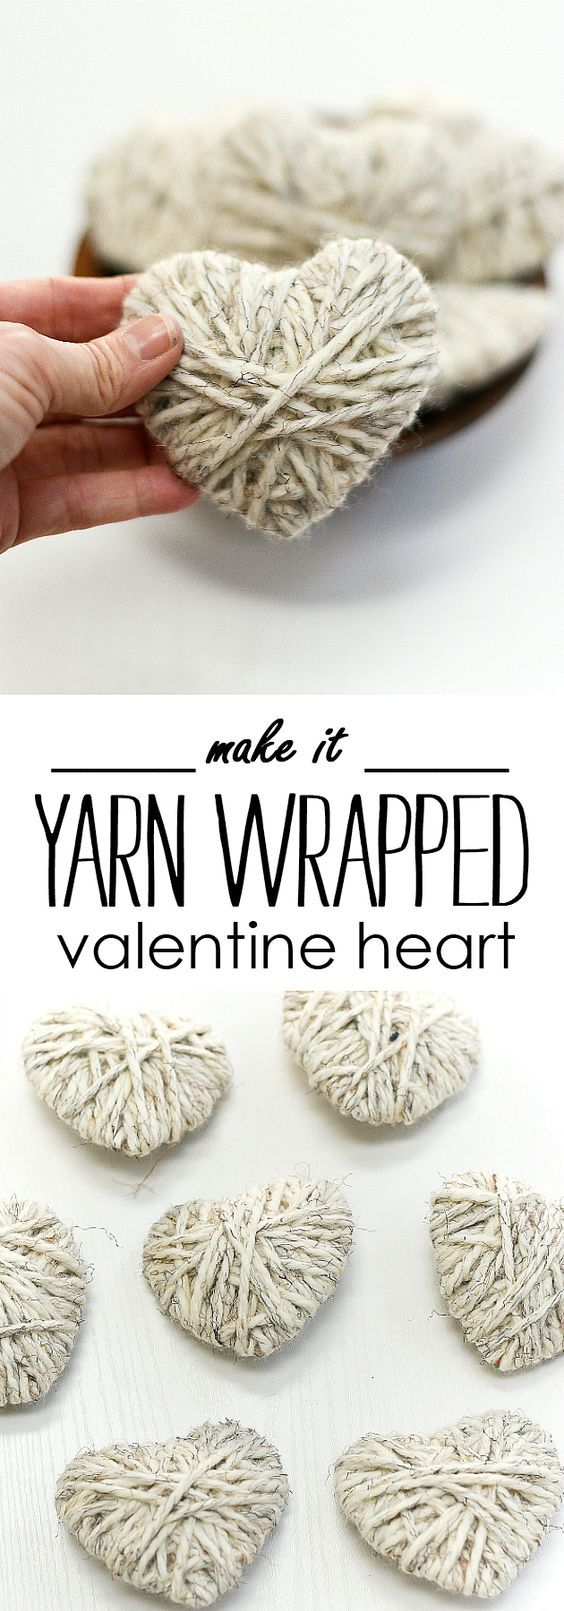 Yarn Wrapped Hearts - Valentine Craft Ideas with Yarn - Neutral Valentine Craft ...